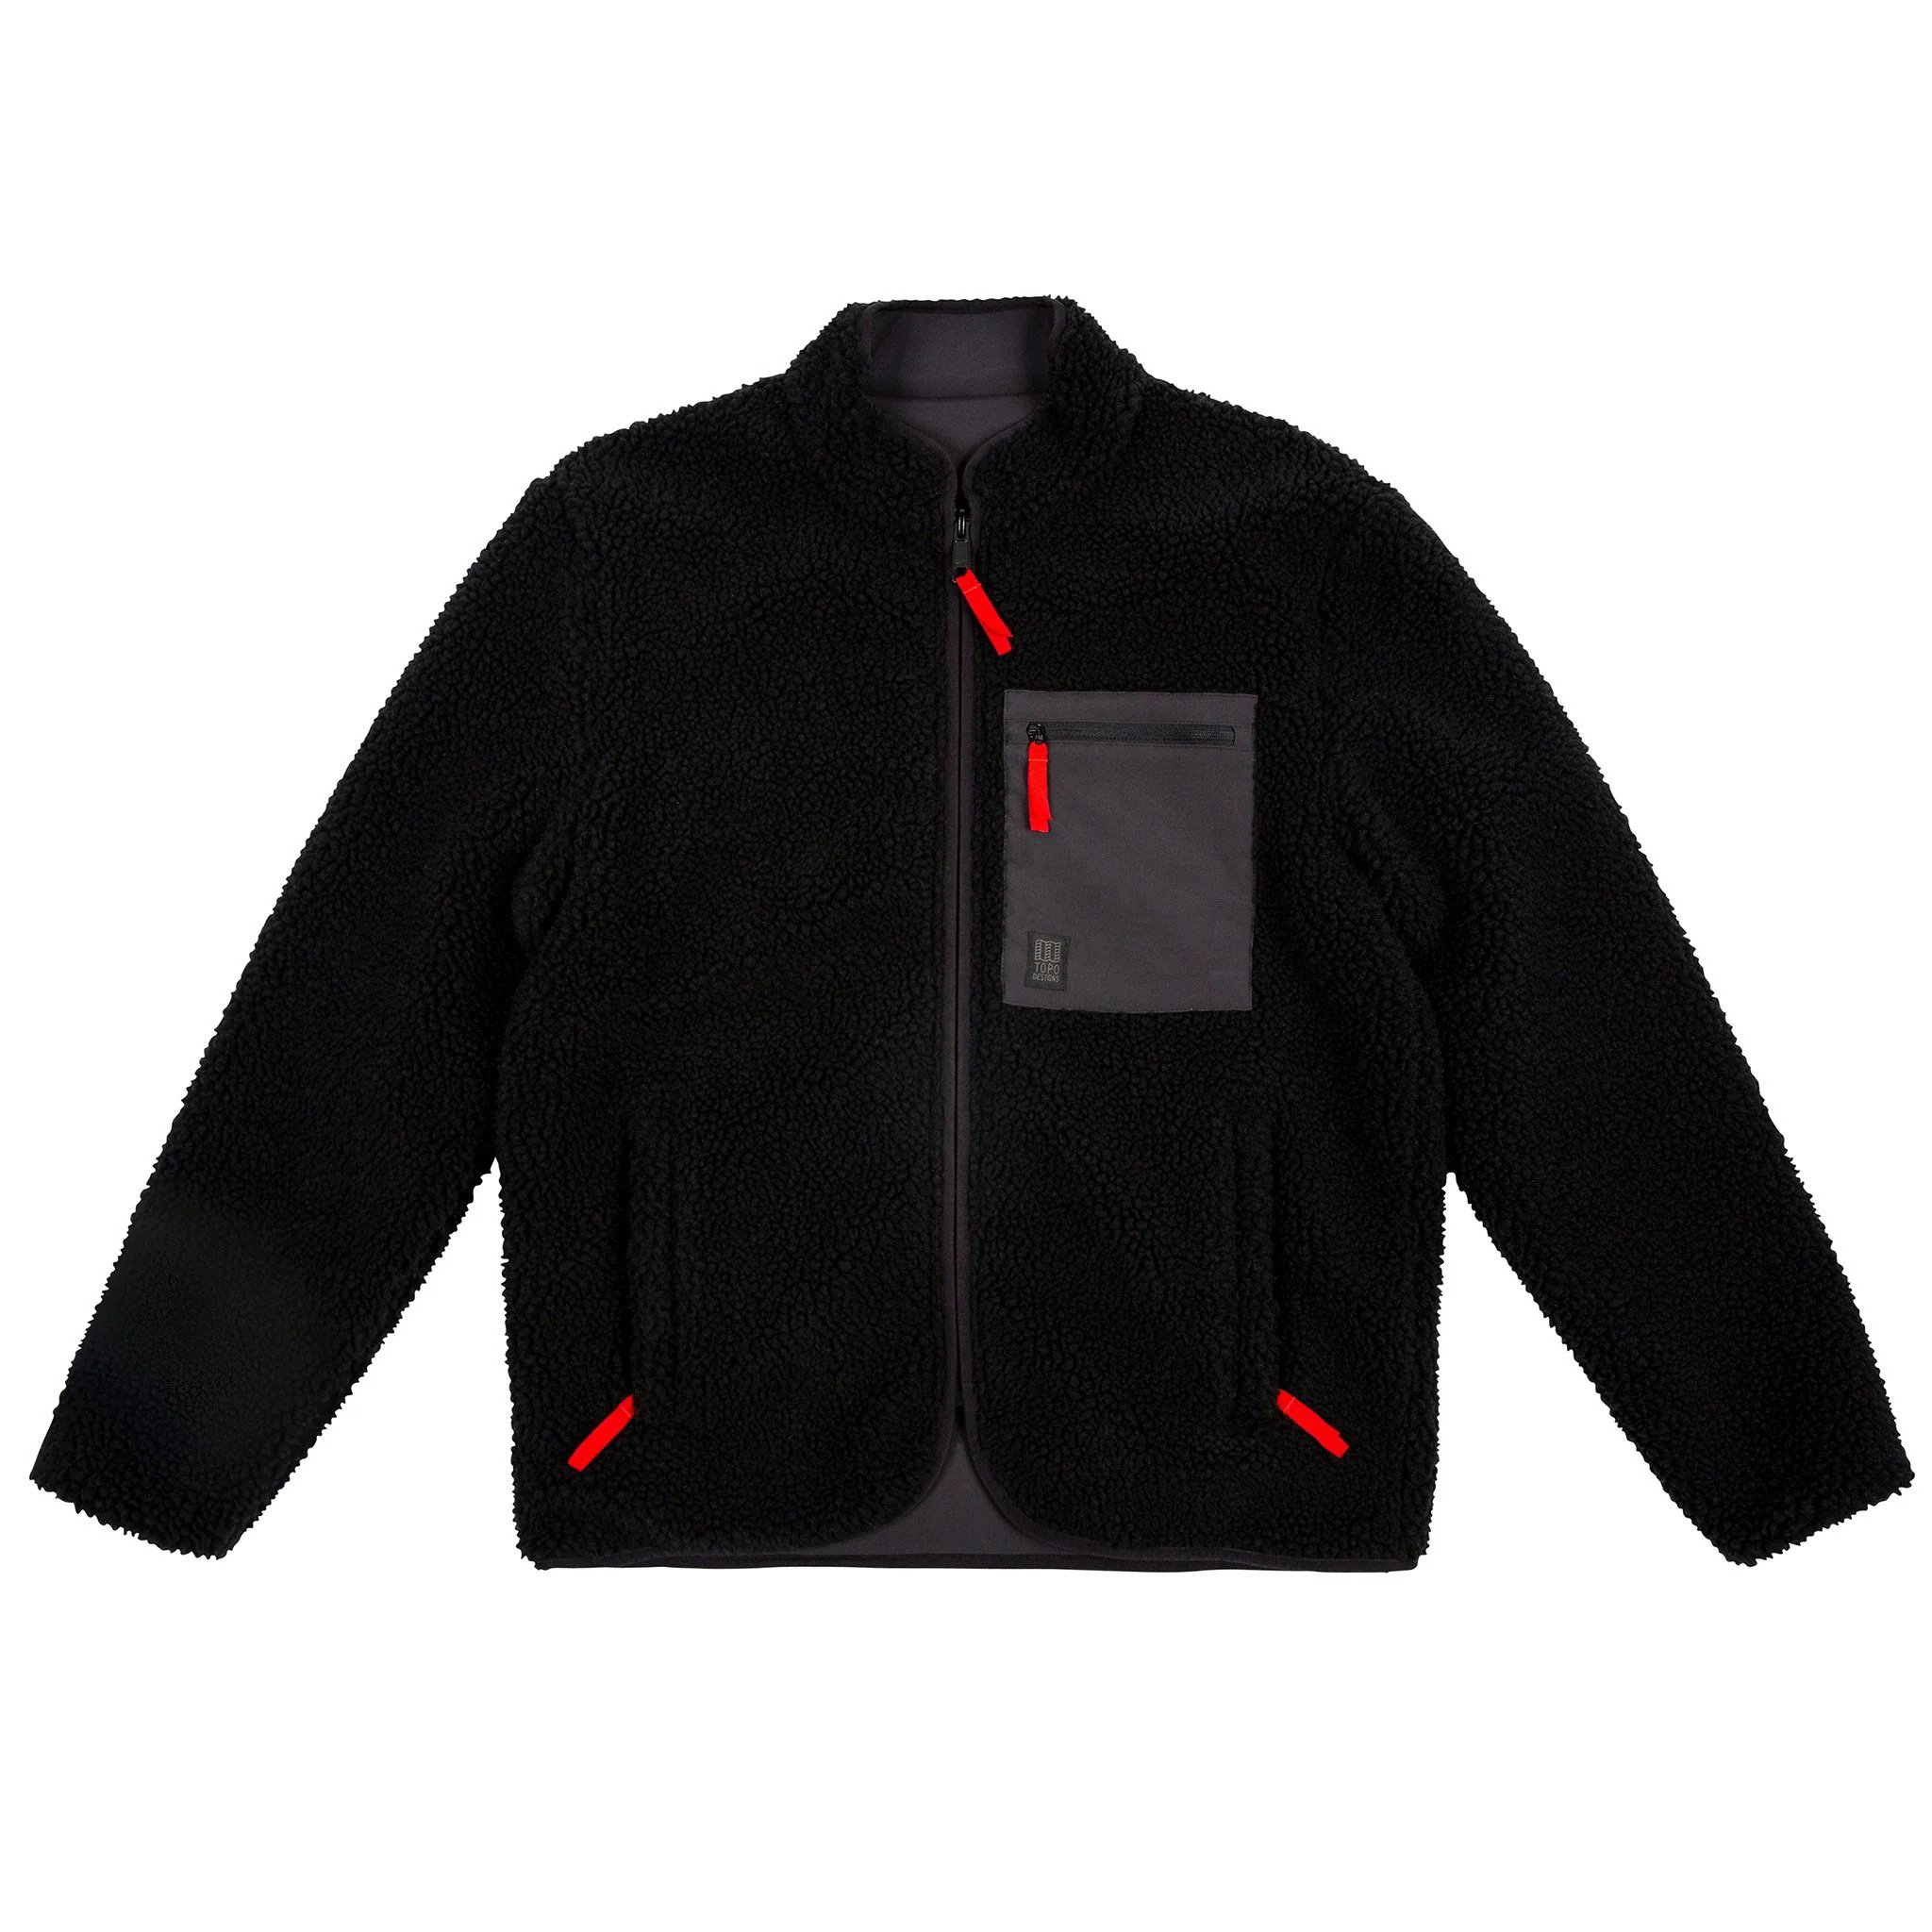 TOPO Designs - Sherpa Jacket - Black